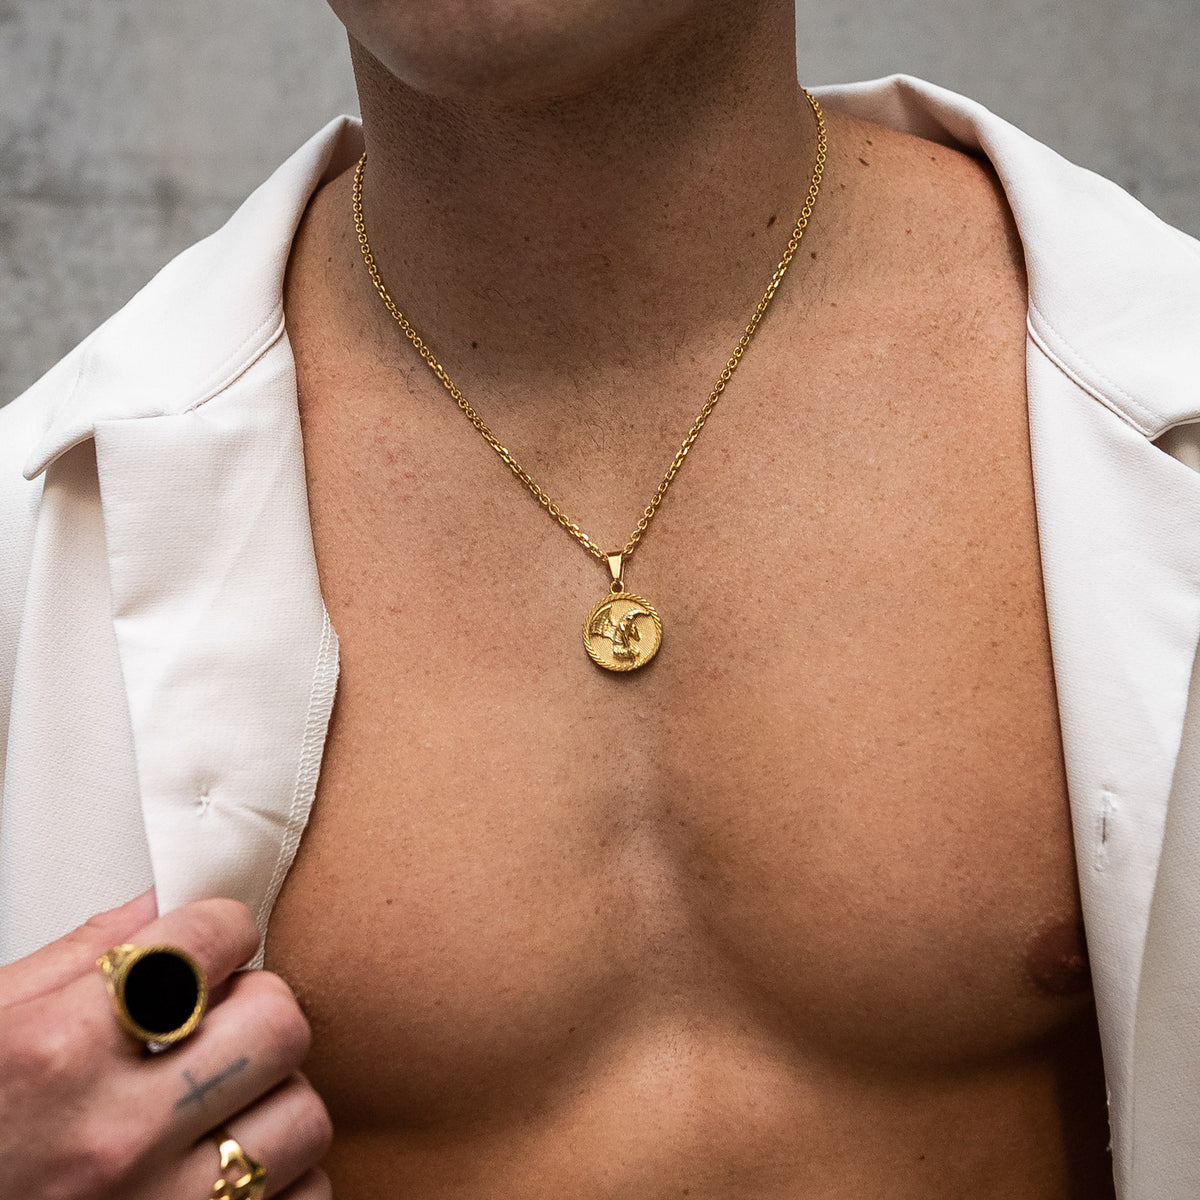 Angel medallion pendant necklace in gold for men